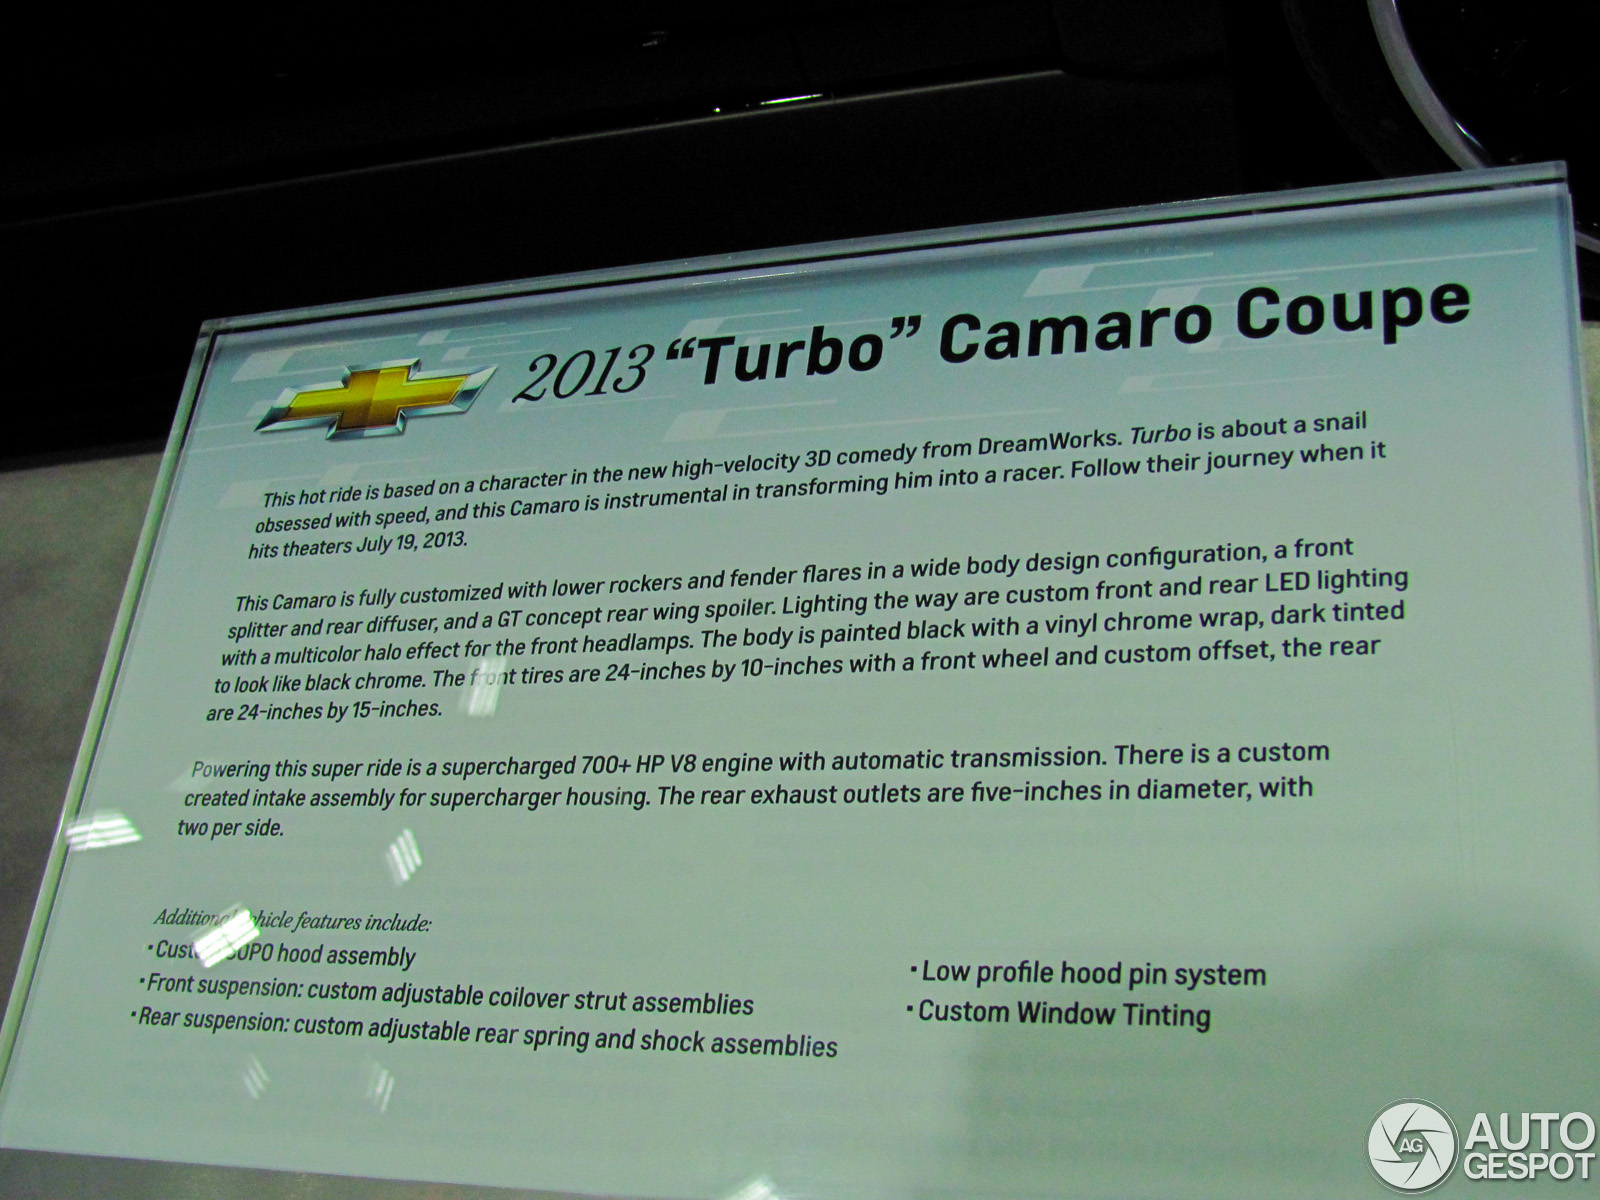 Le Chicago Motor Show 2013 : la Chevrolet "Turbo" Camaro Coupé